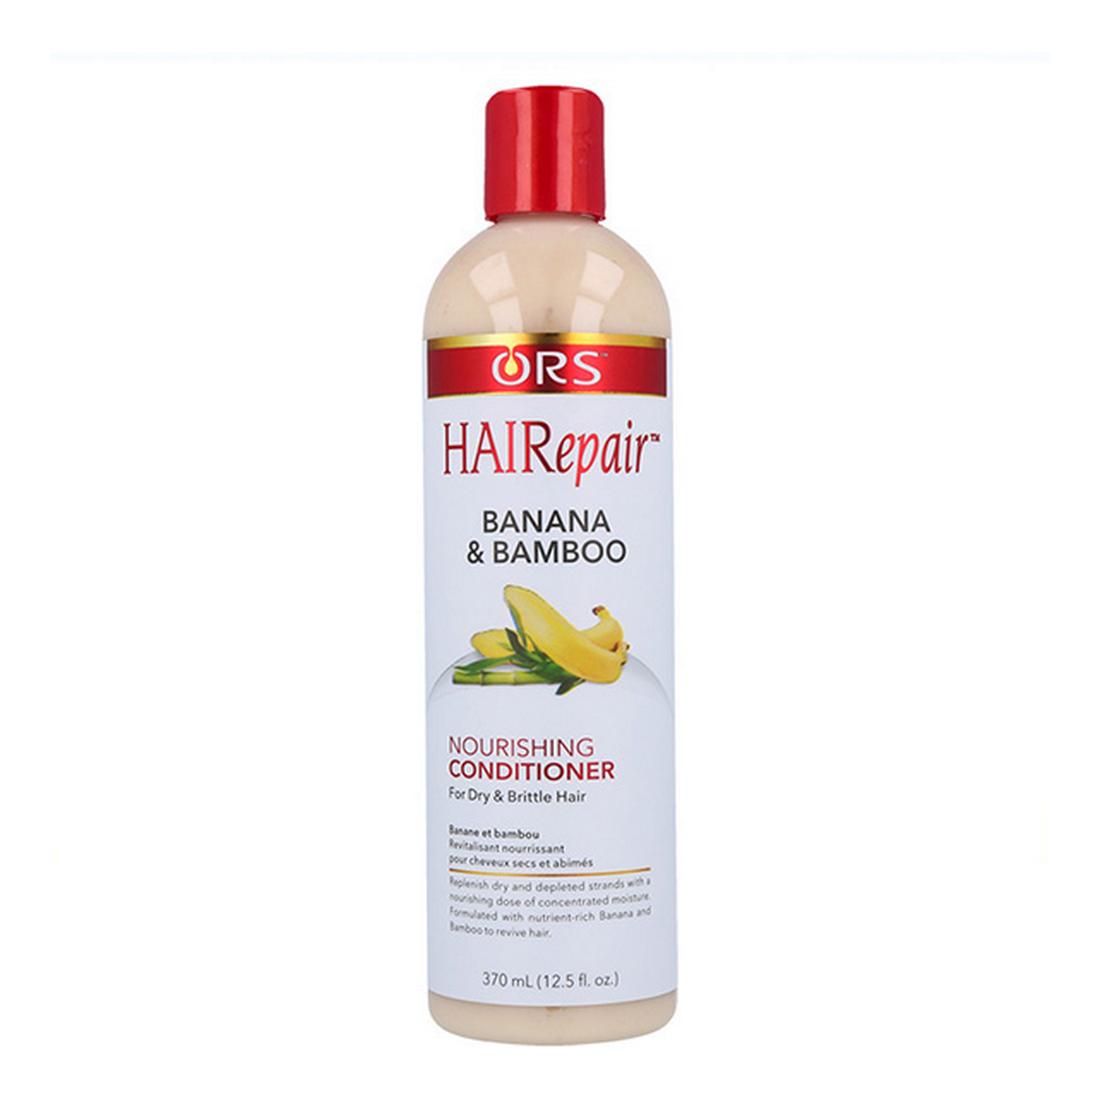 Balsam Hairepair Banana and Bamboo Ors (370 ml)